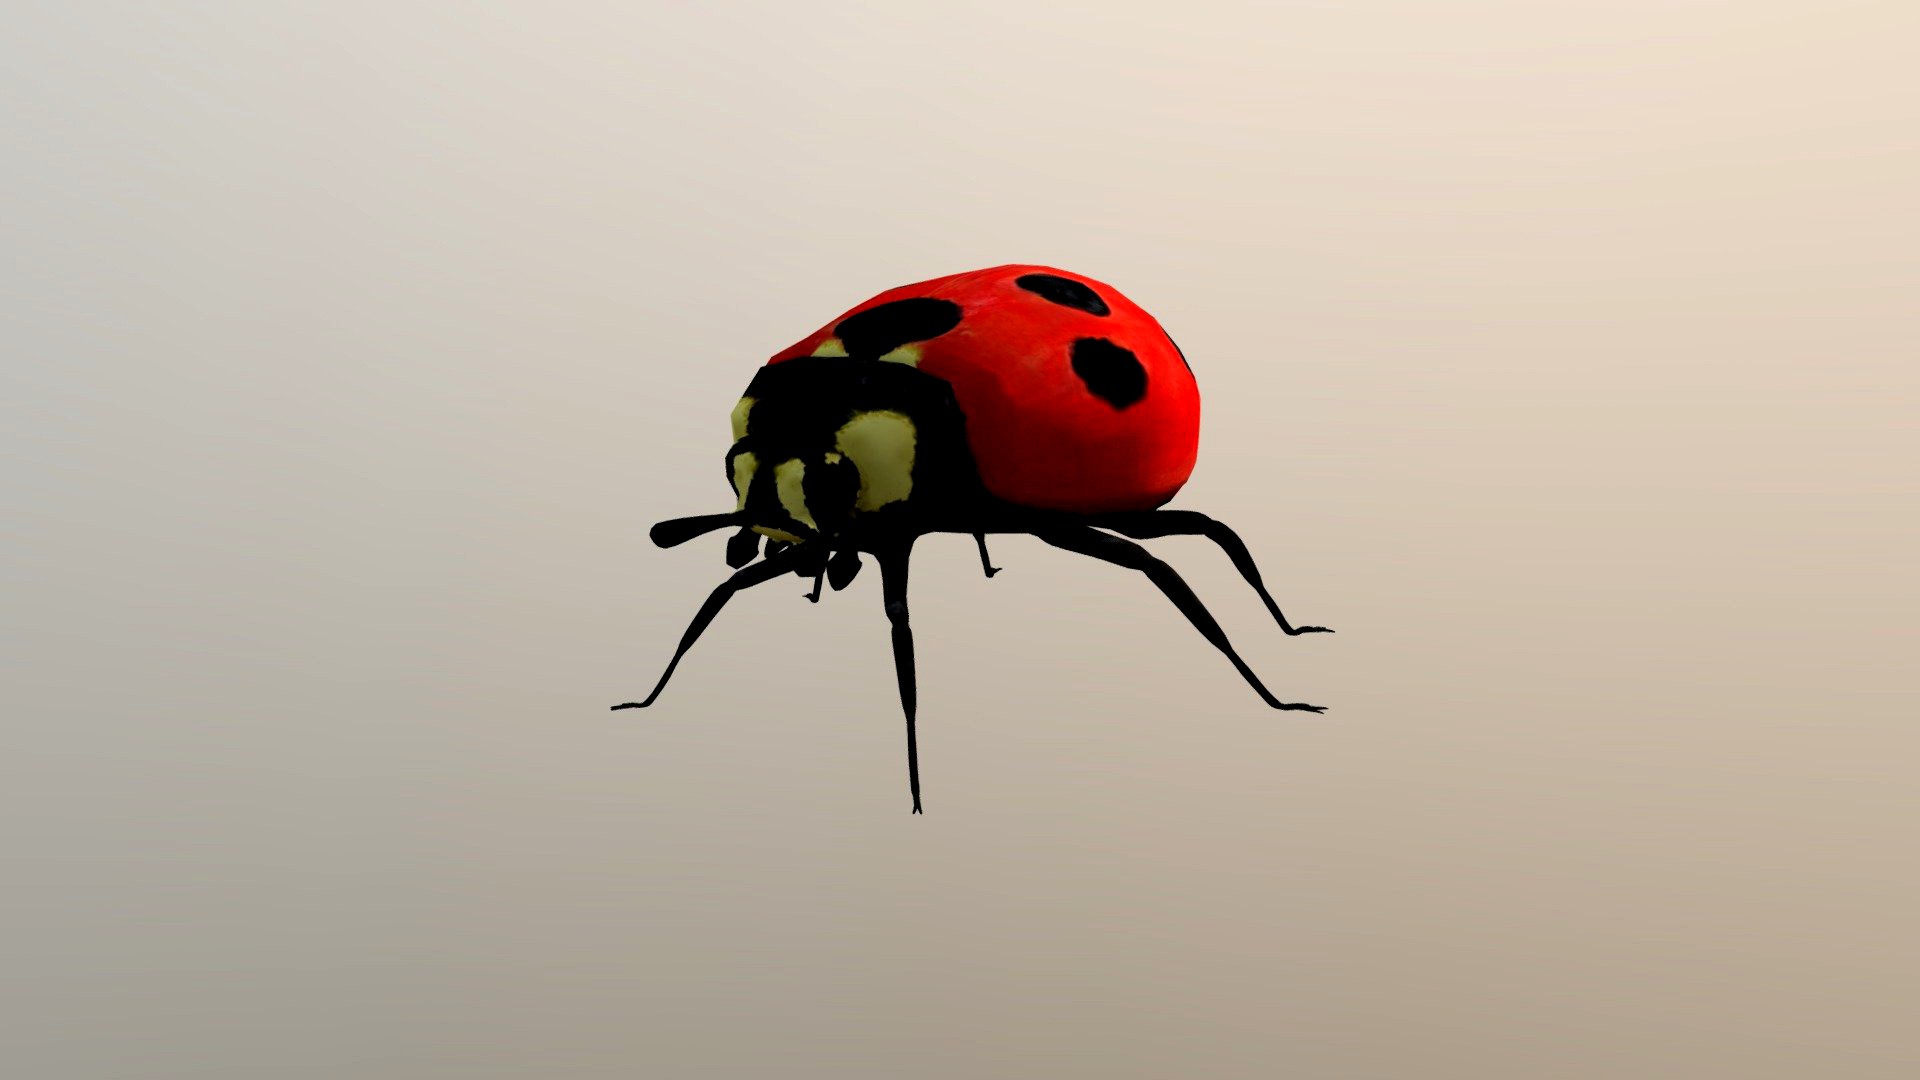 Ladybug